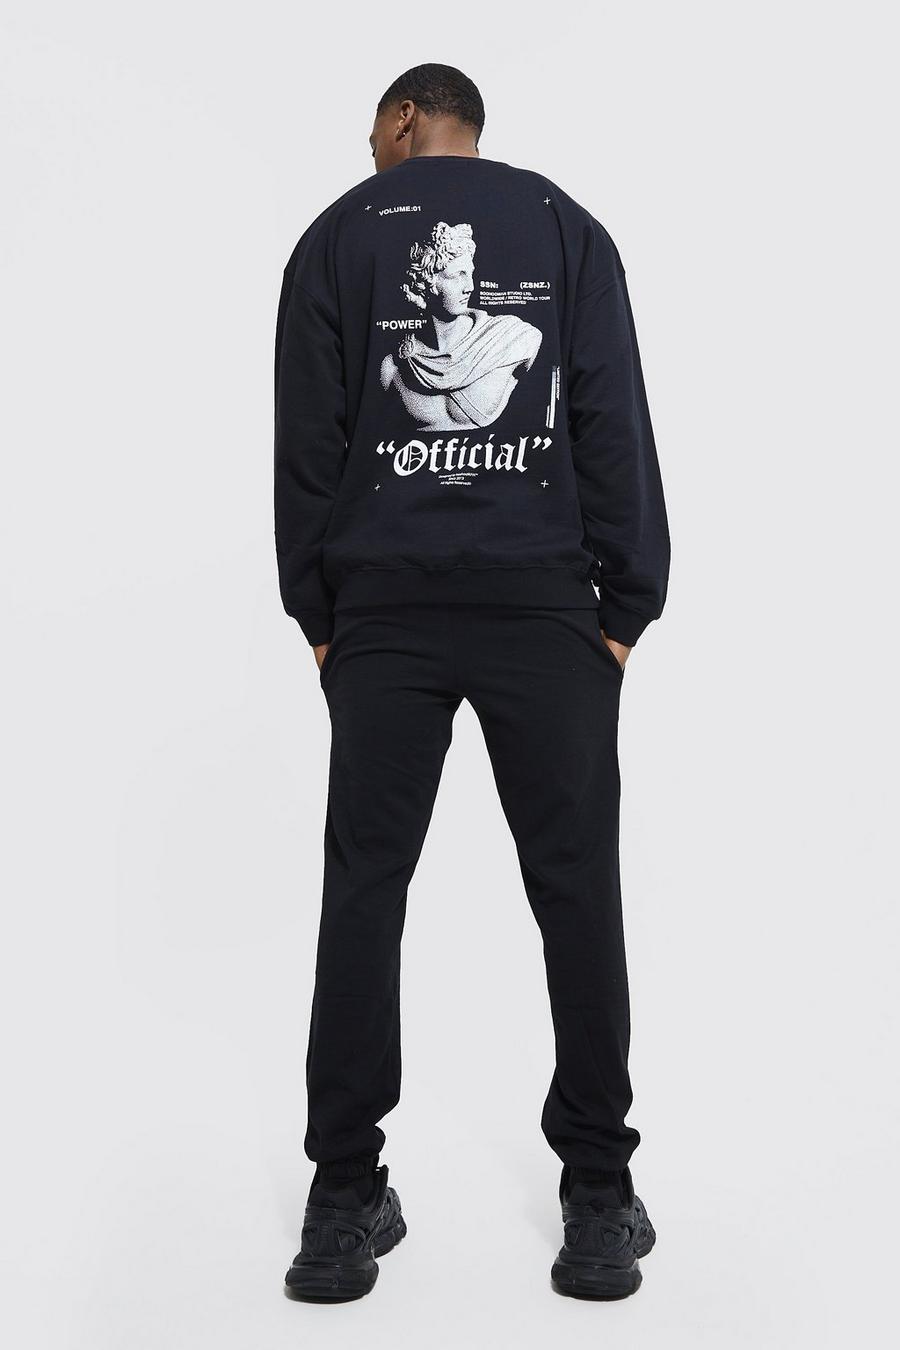 Black svart Oversized Official Sweatshirt Tracksuit